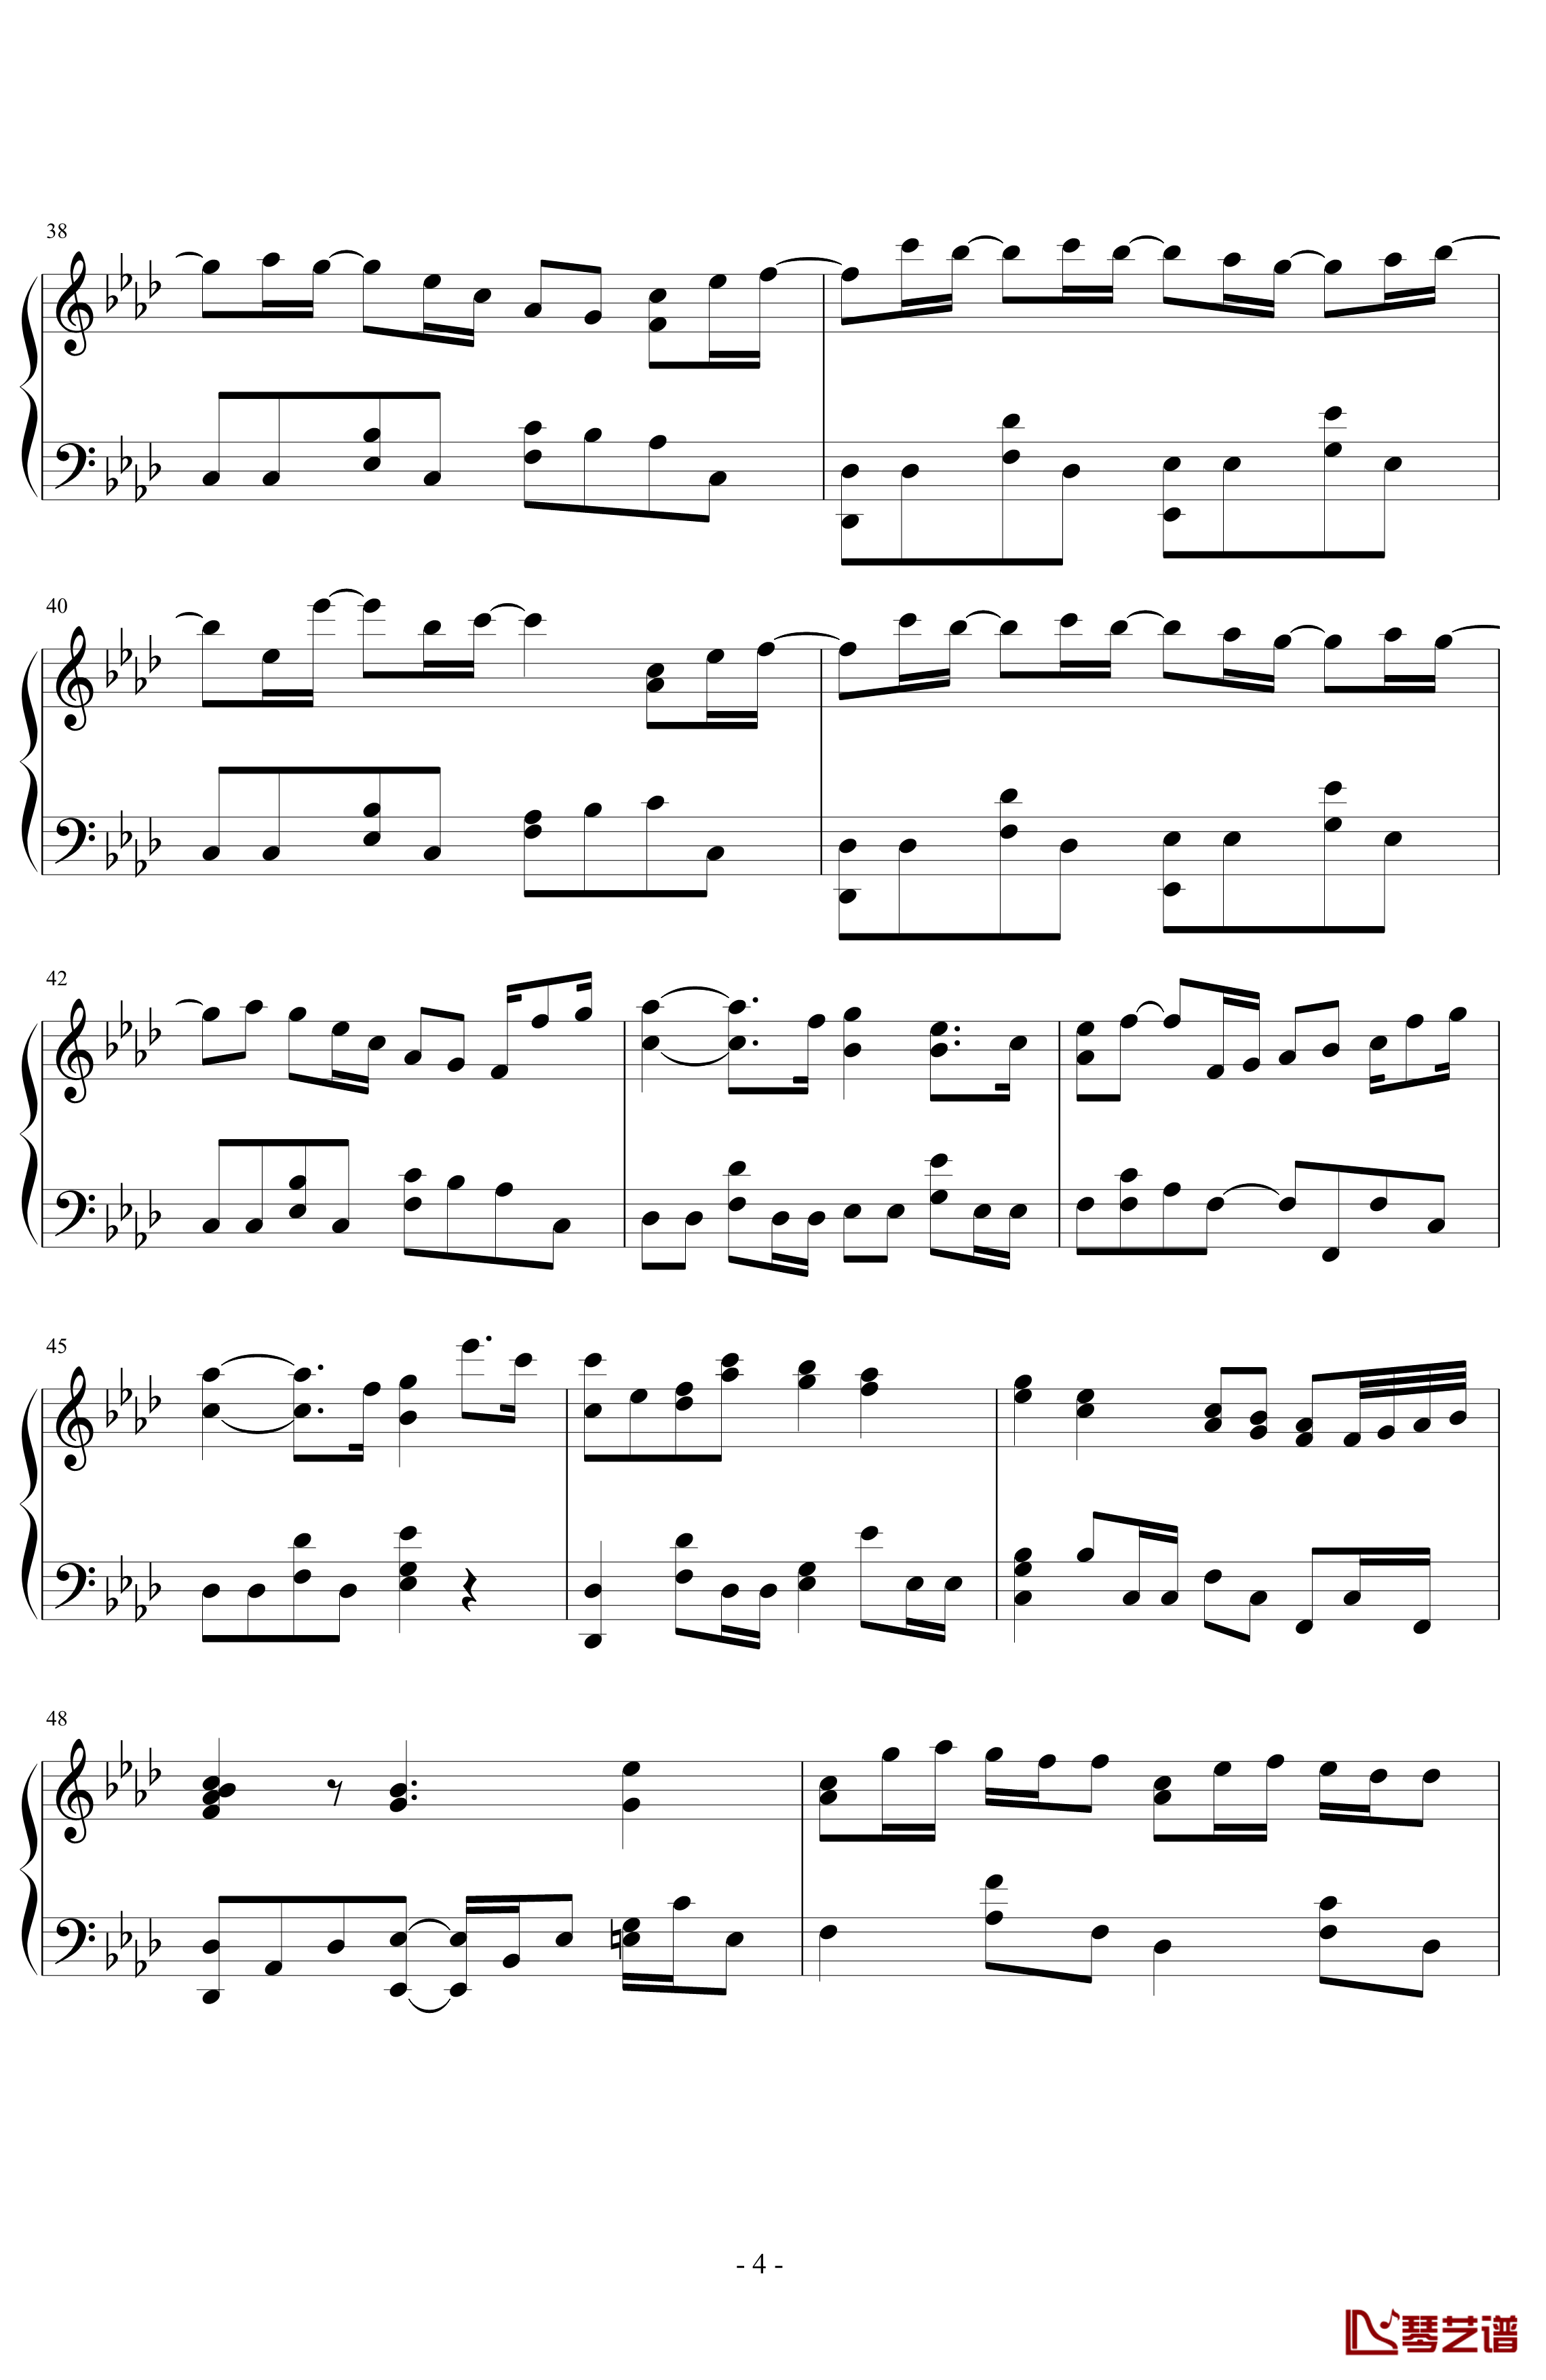 SAKURA钢琴谱-非常好听一首曲子-生物股长4